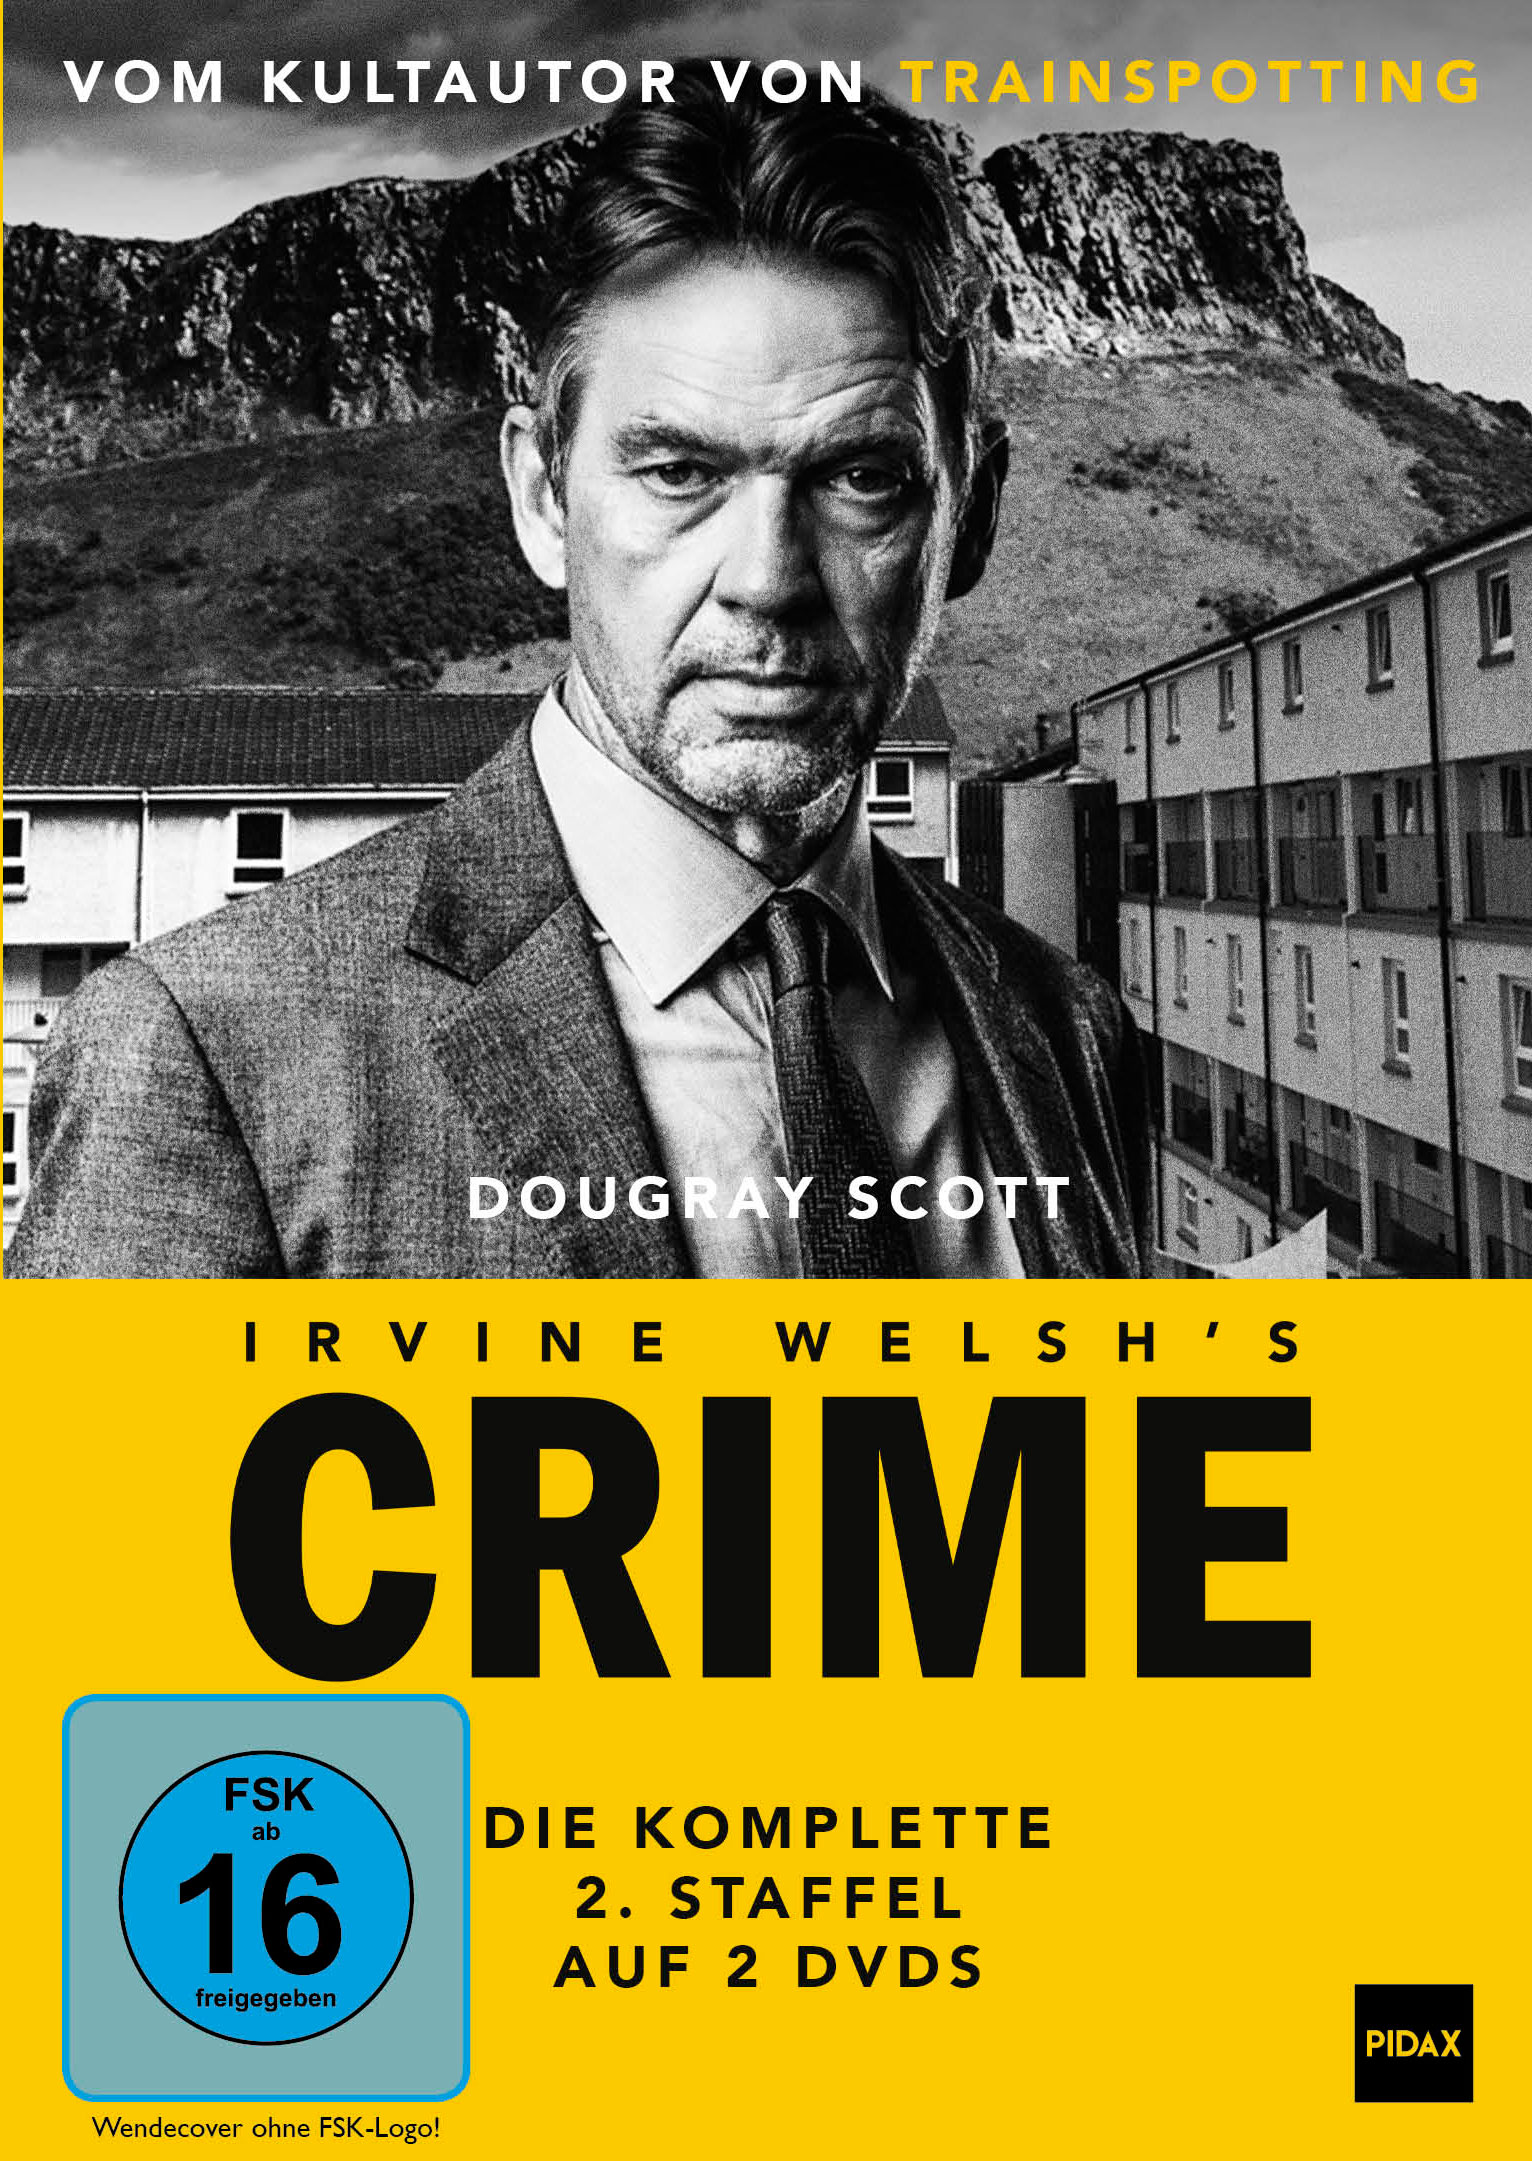 Irvine Welsh's CRIME, Staffel 2